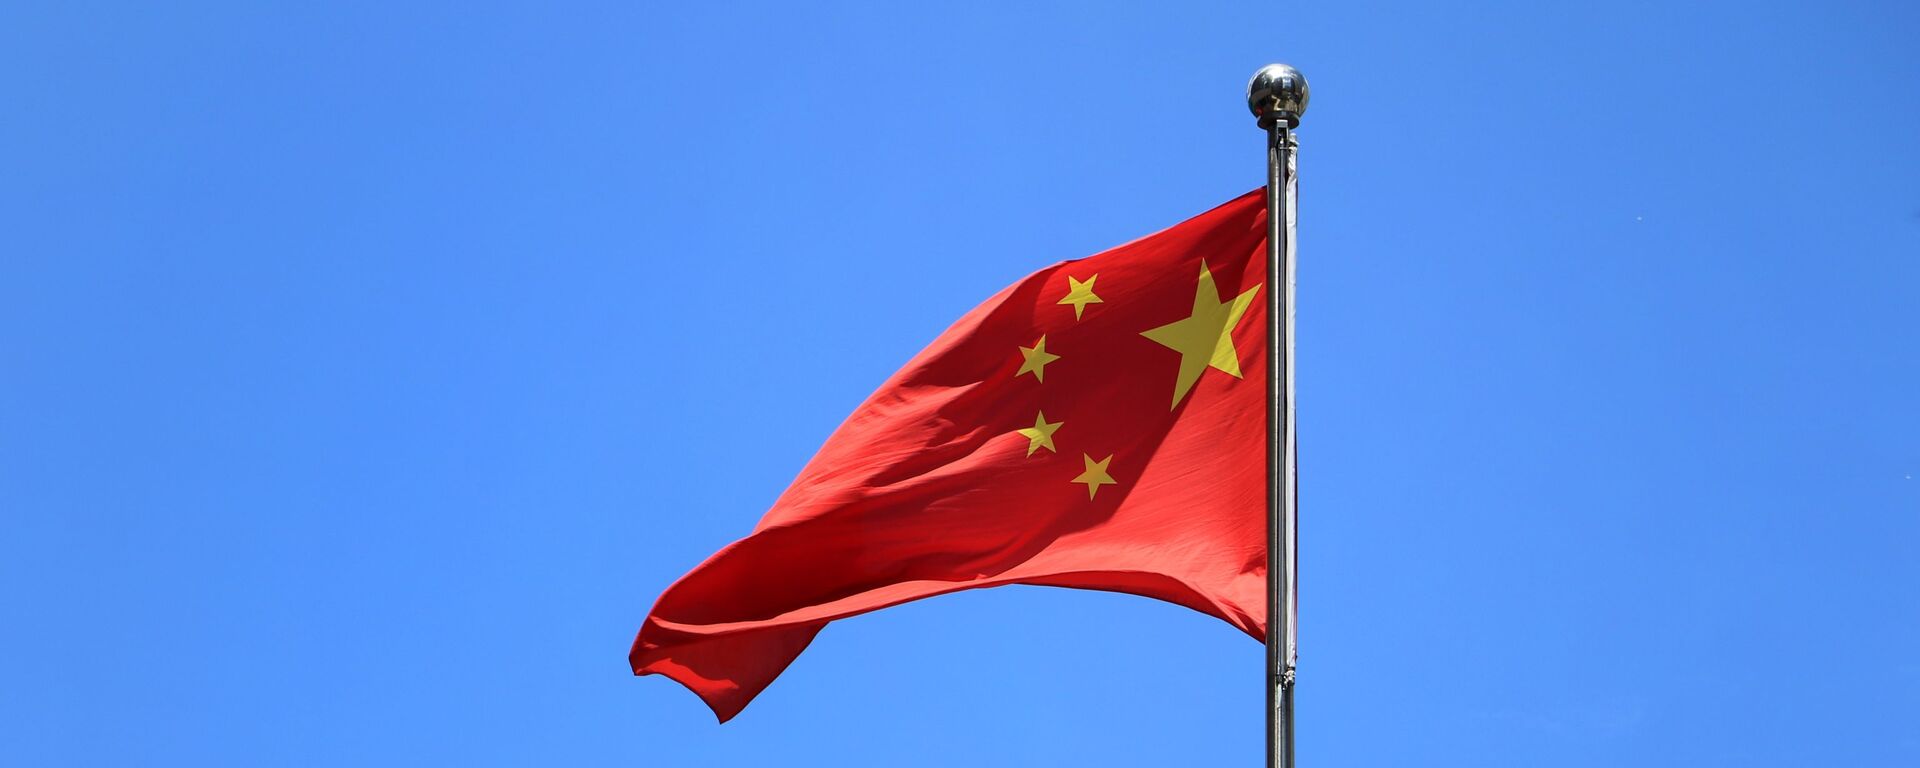 La bandera de China - Sputnik Mundo, 1920, 21.07.2021